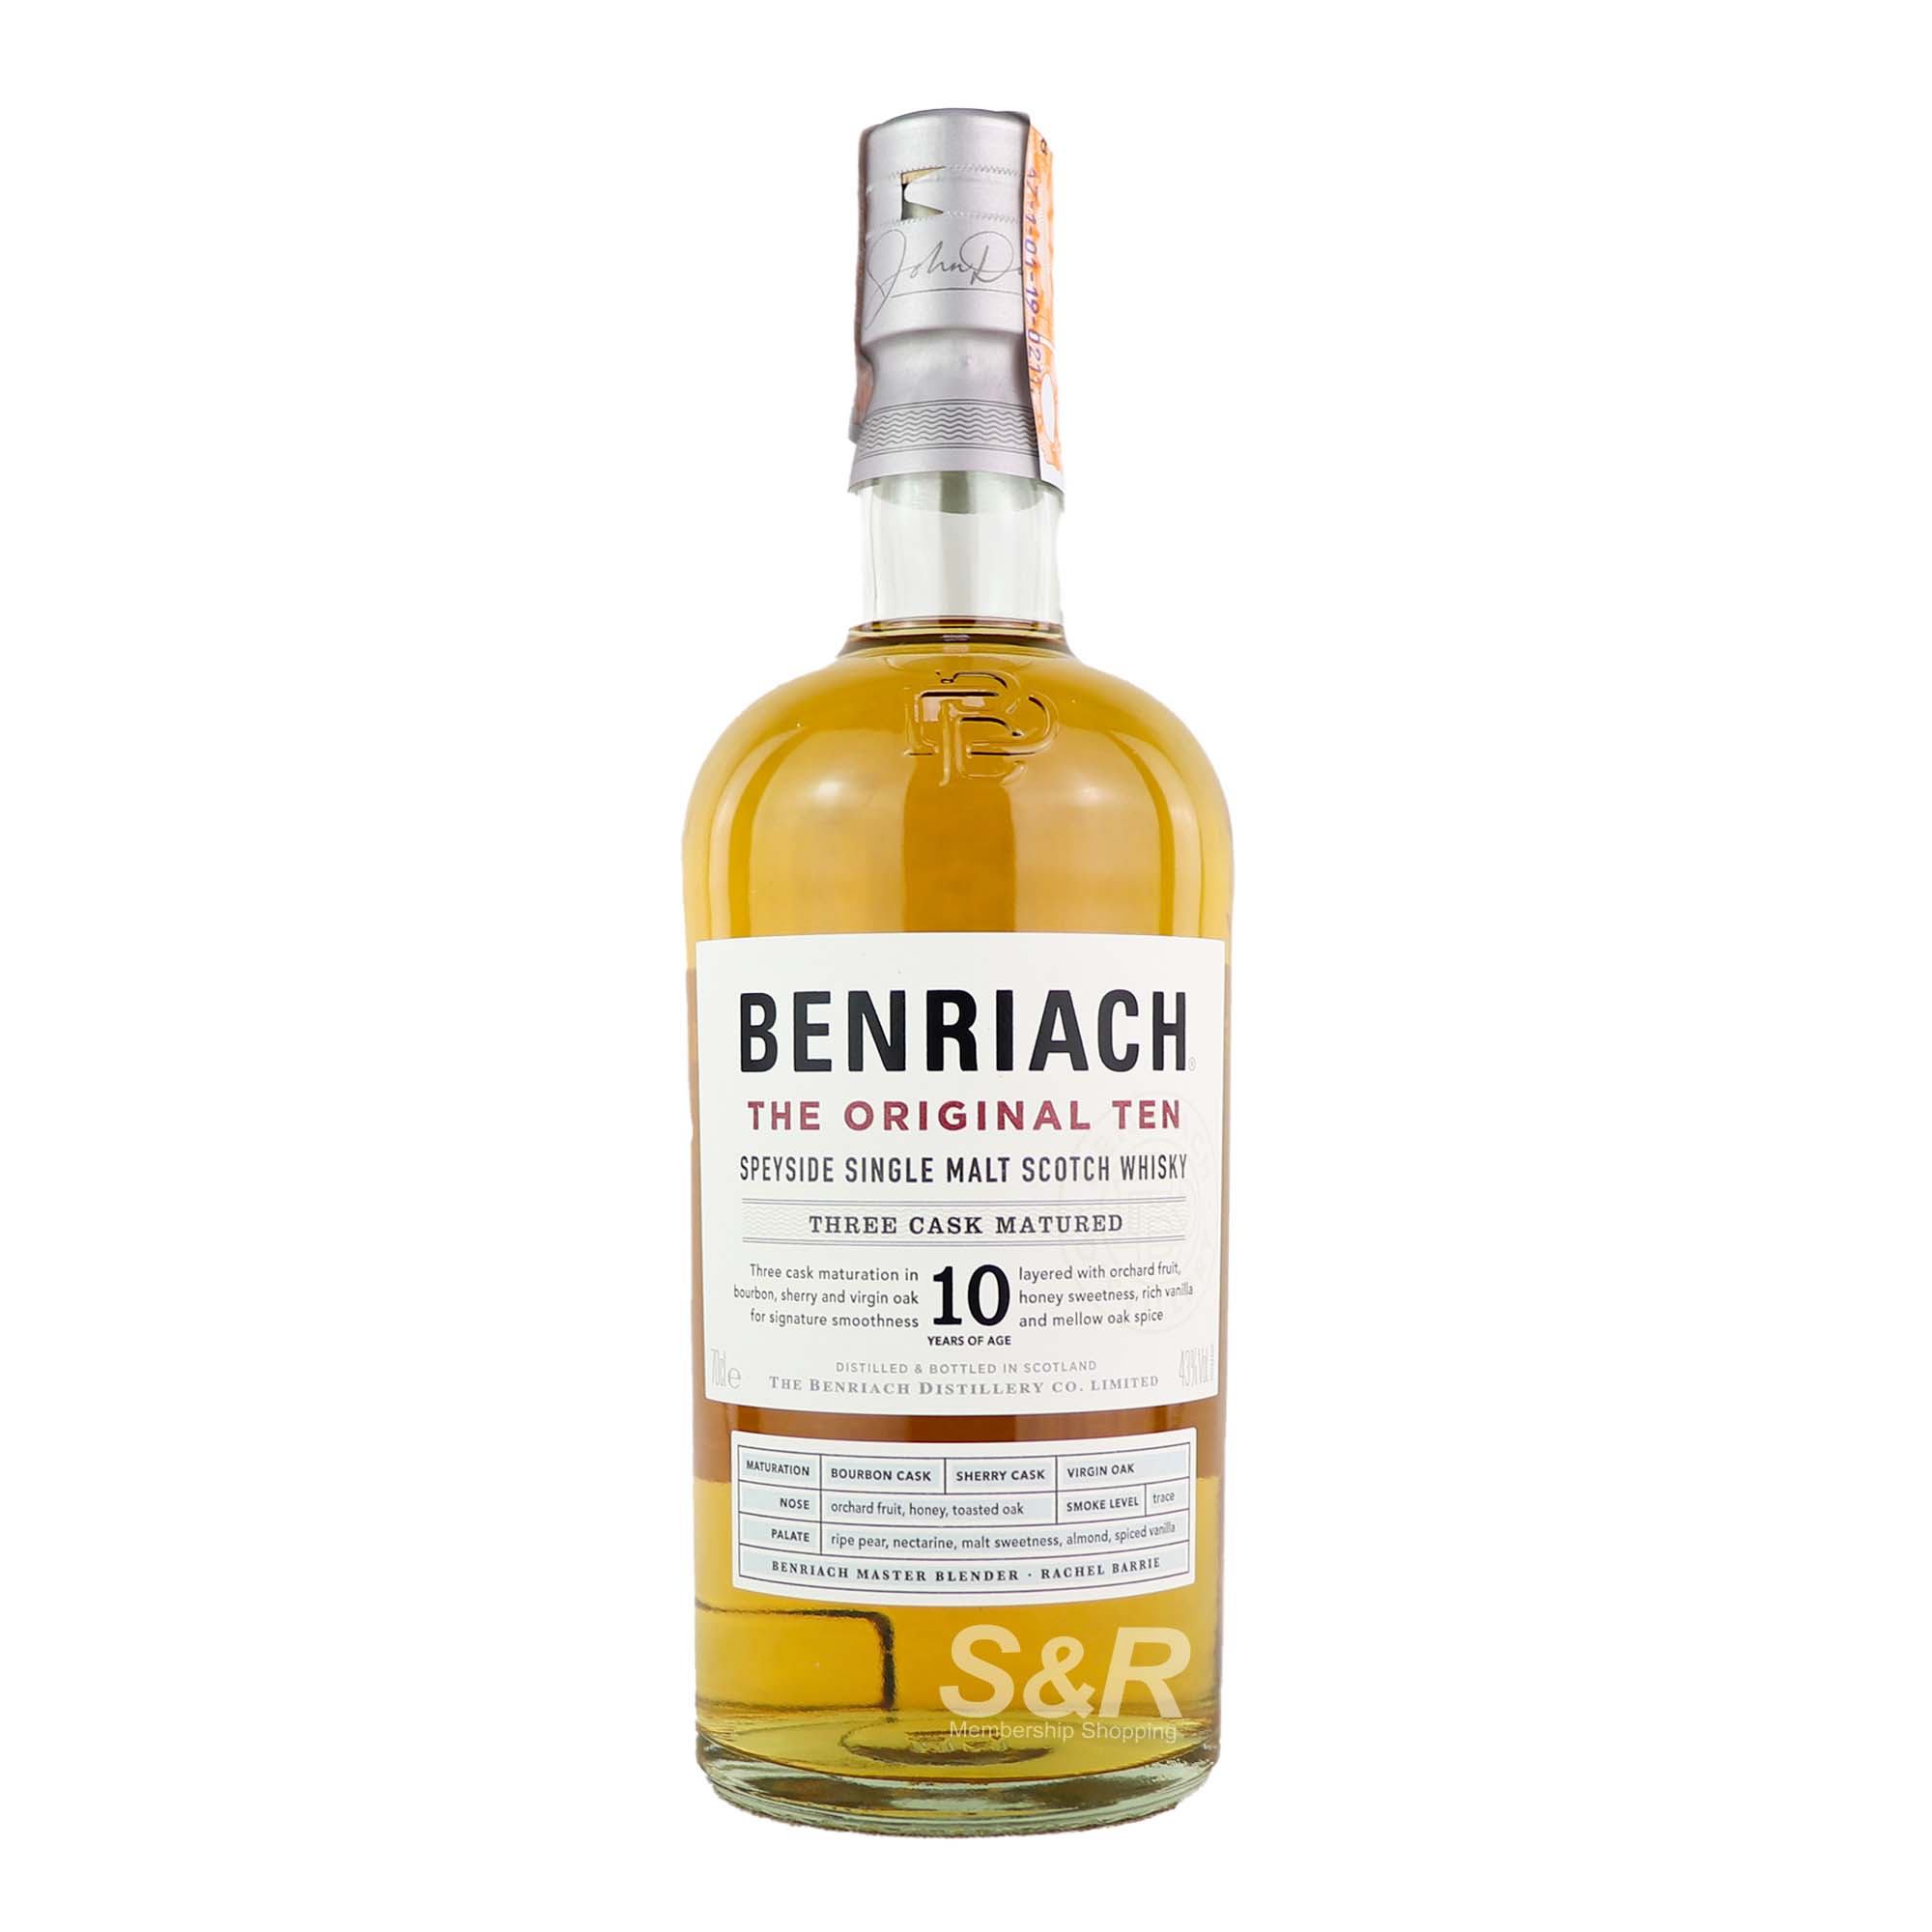 Benriach The Original Ten Speyside Single Malt Scotch Whisky 700mL